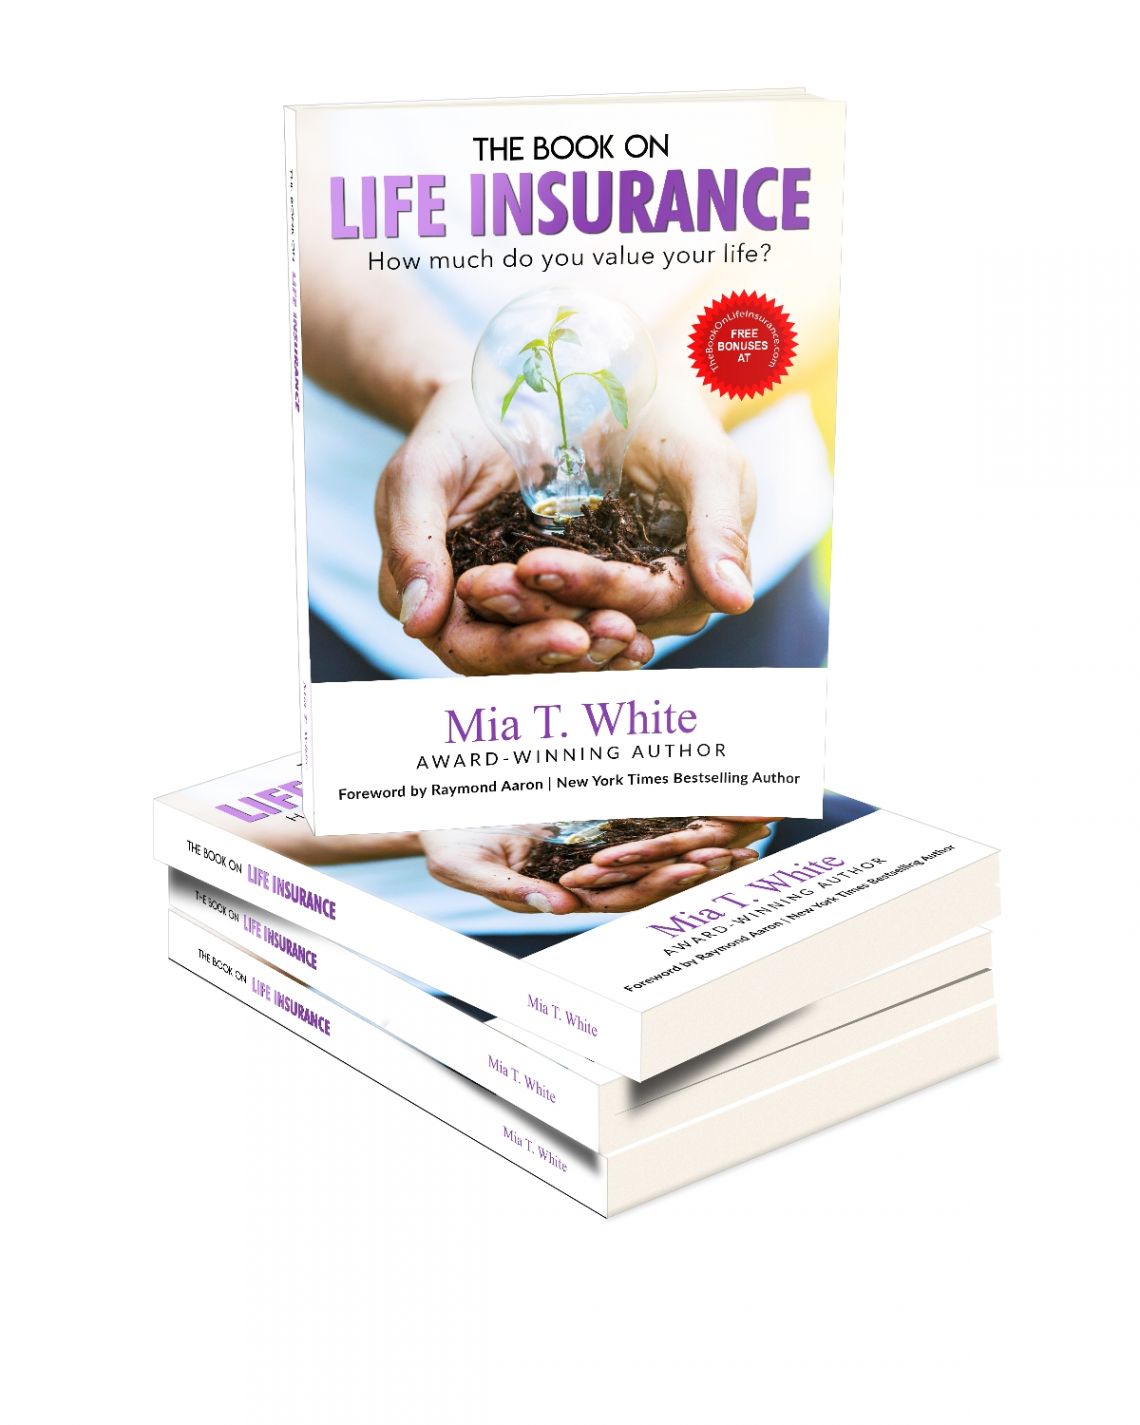 (Life Insurance ) Mia White